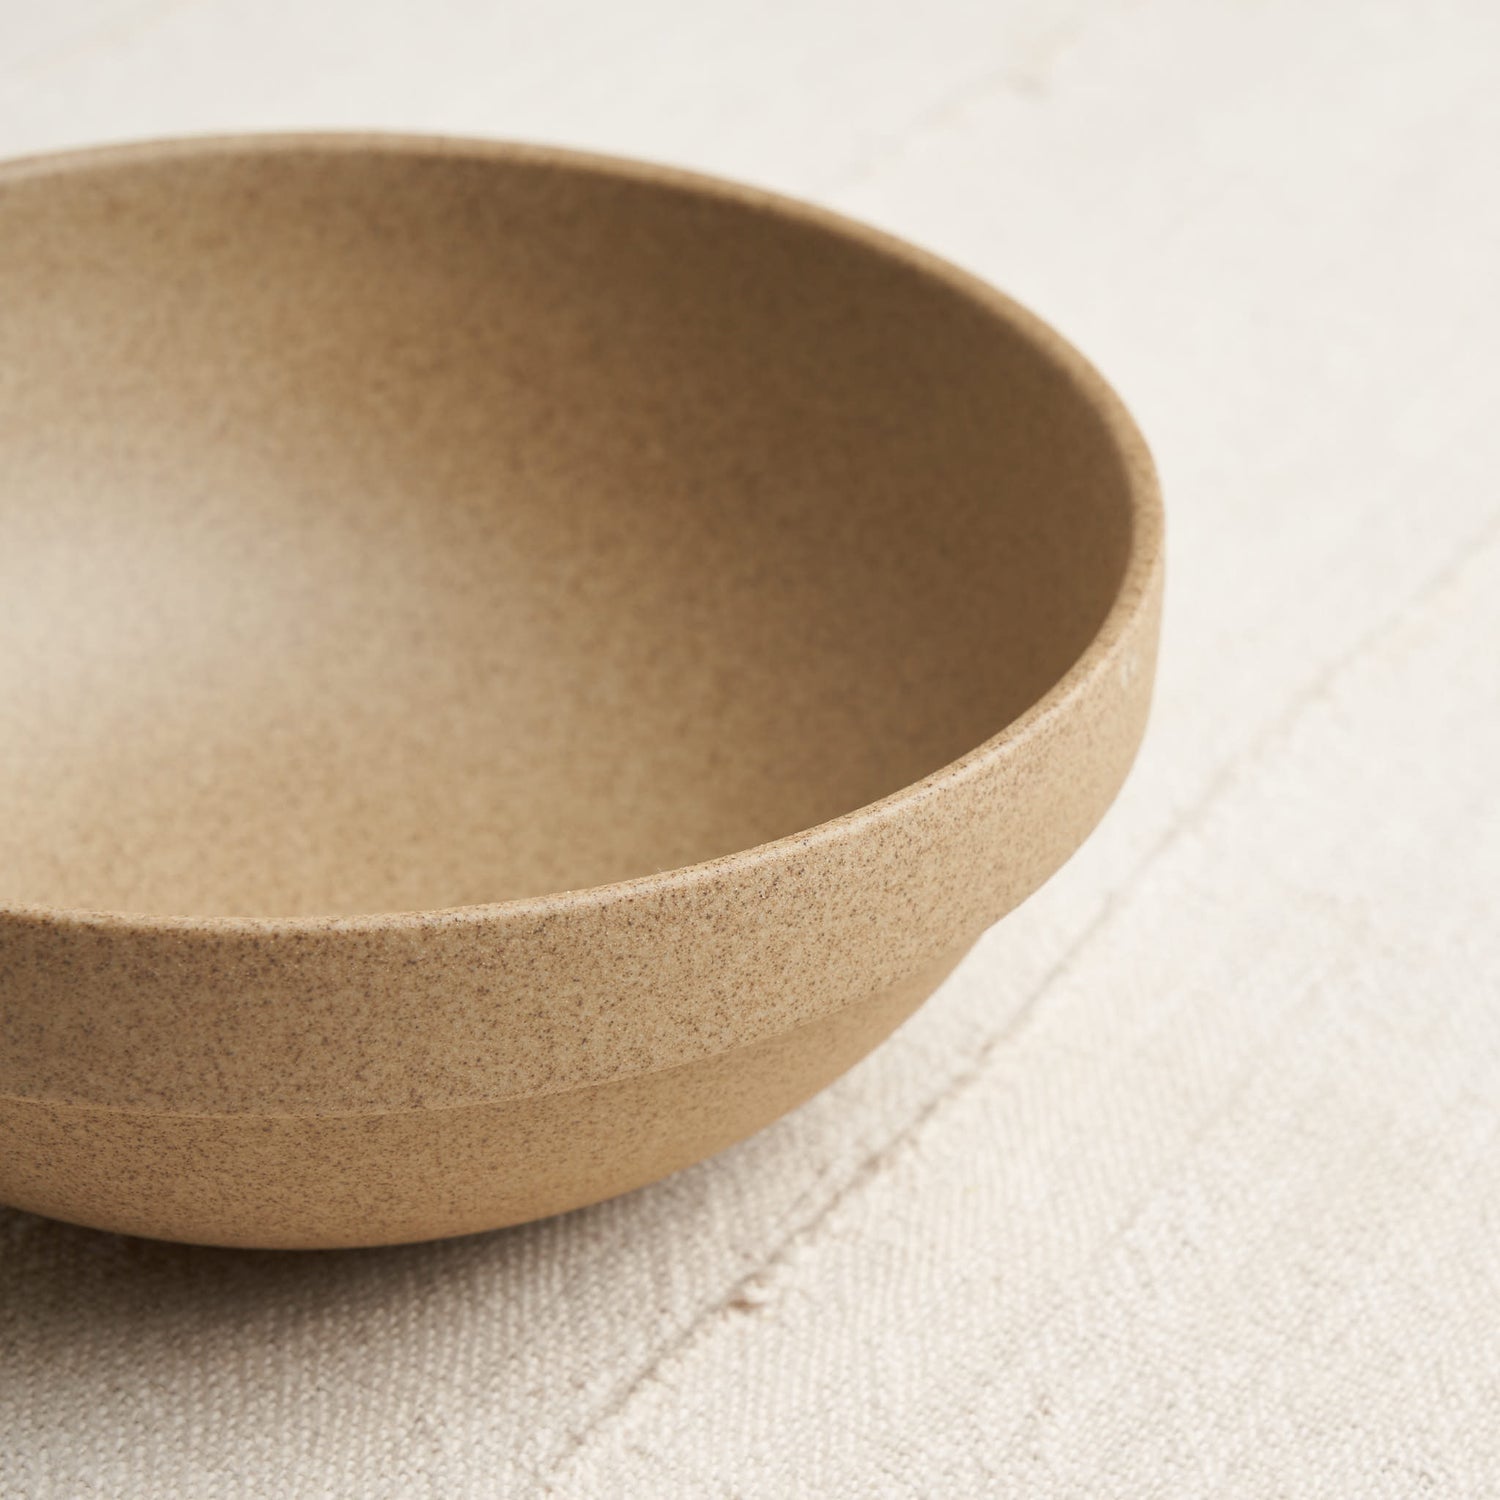 Round Bowl in Unglazed Porcelain